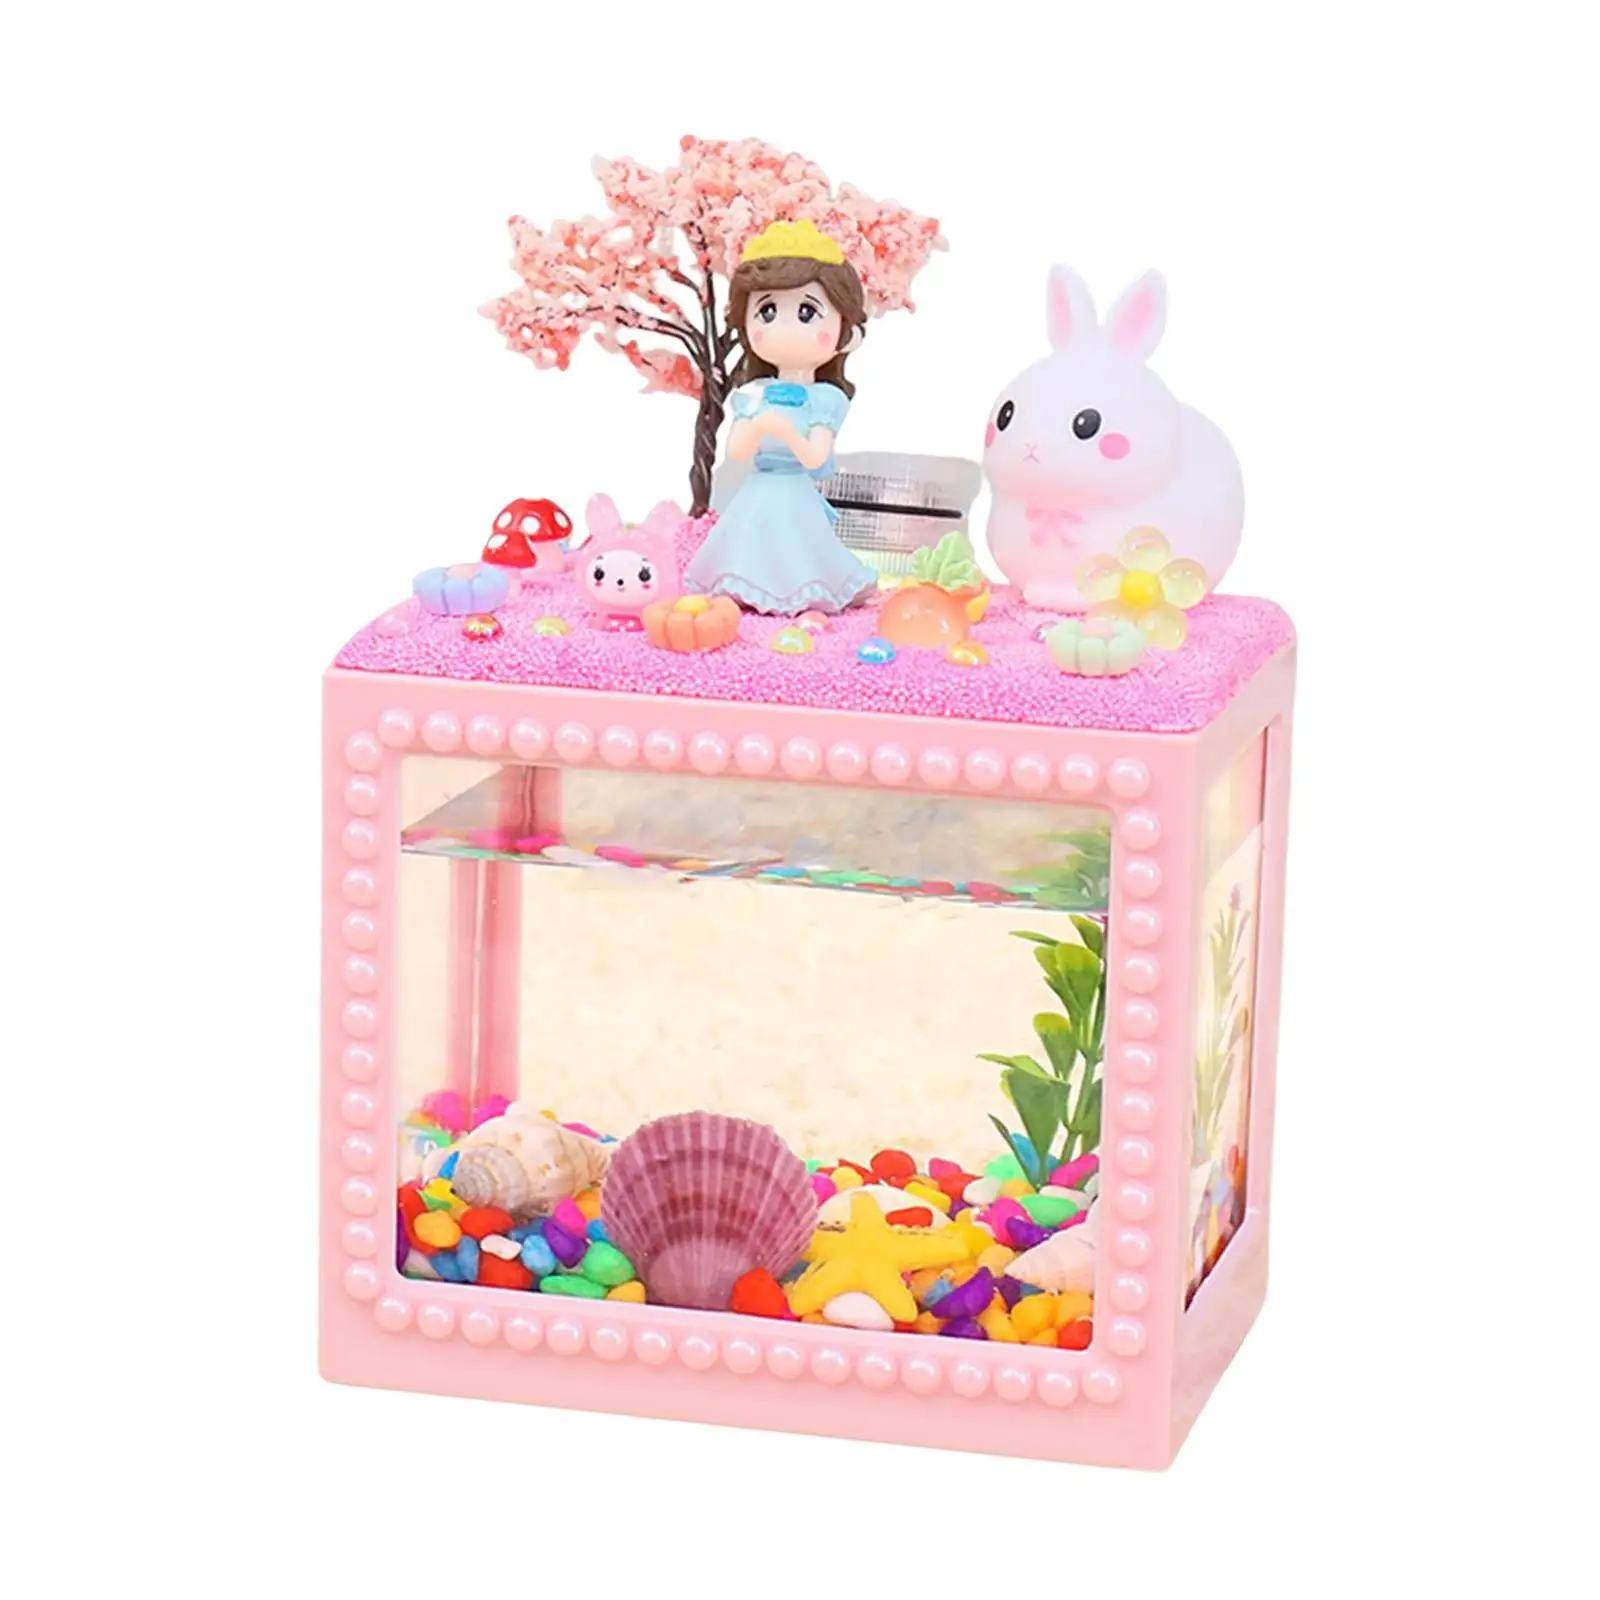 DIY Aquarium for Kids Micro Blocks with Figures Christmas & Birthday Gift